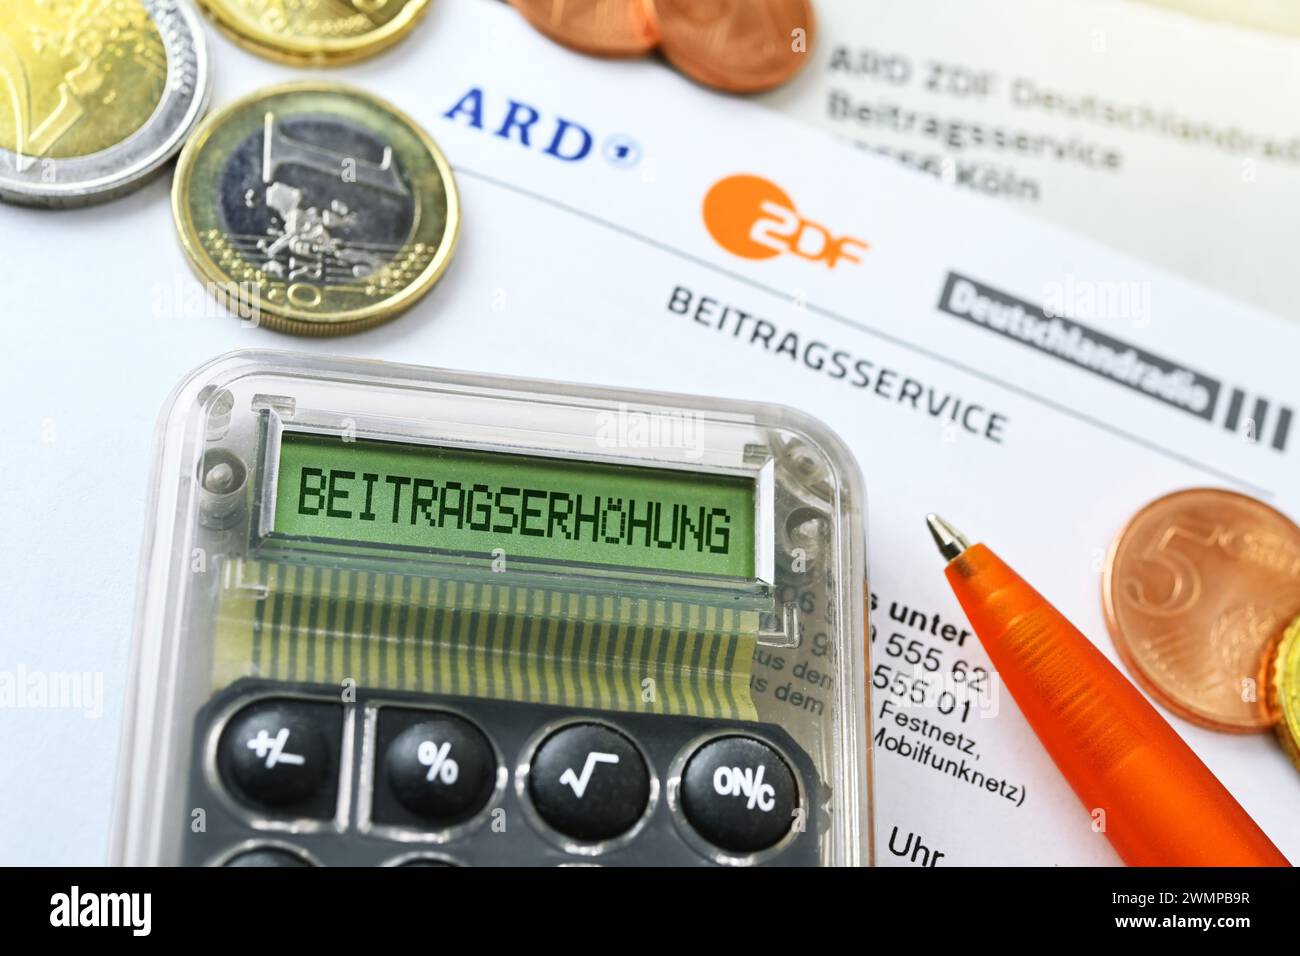 Letter From ARD ZDF Deutschlandradio Beitragsservice With Calculator And Inscription 'Beitragerhöhung', Symbolic Photo 'Erhöhung Des Rundfunkbeitrags' Stock Photo